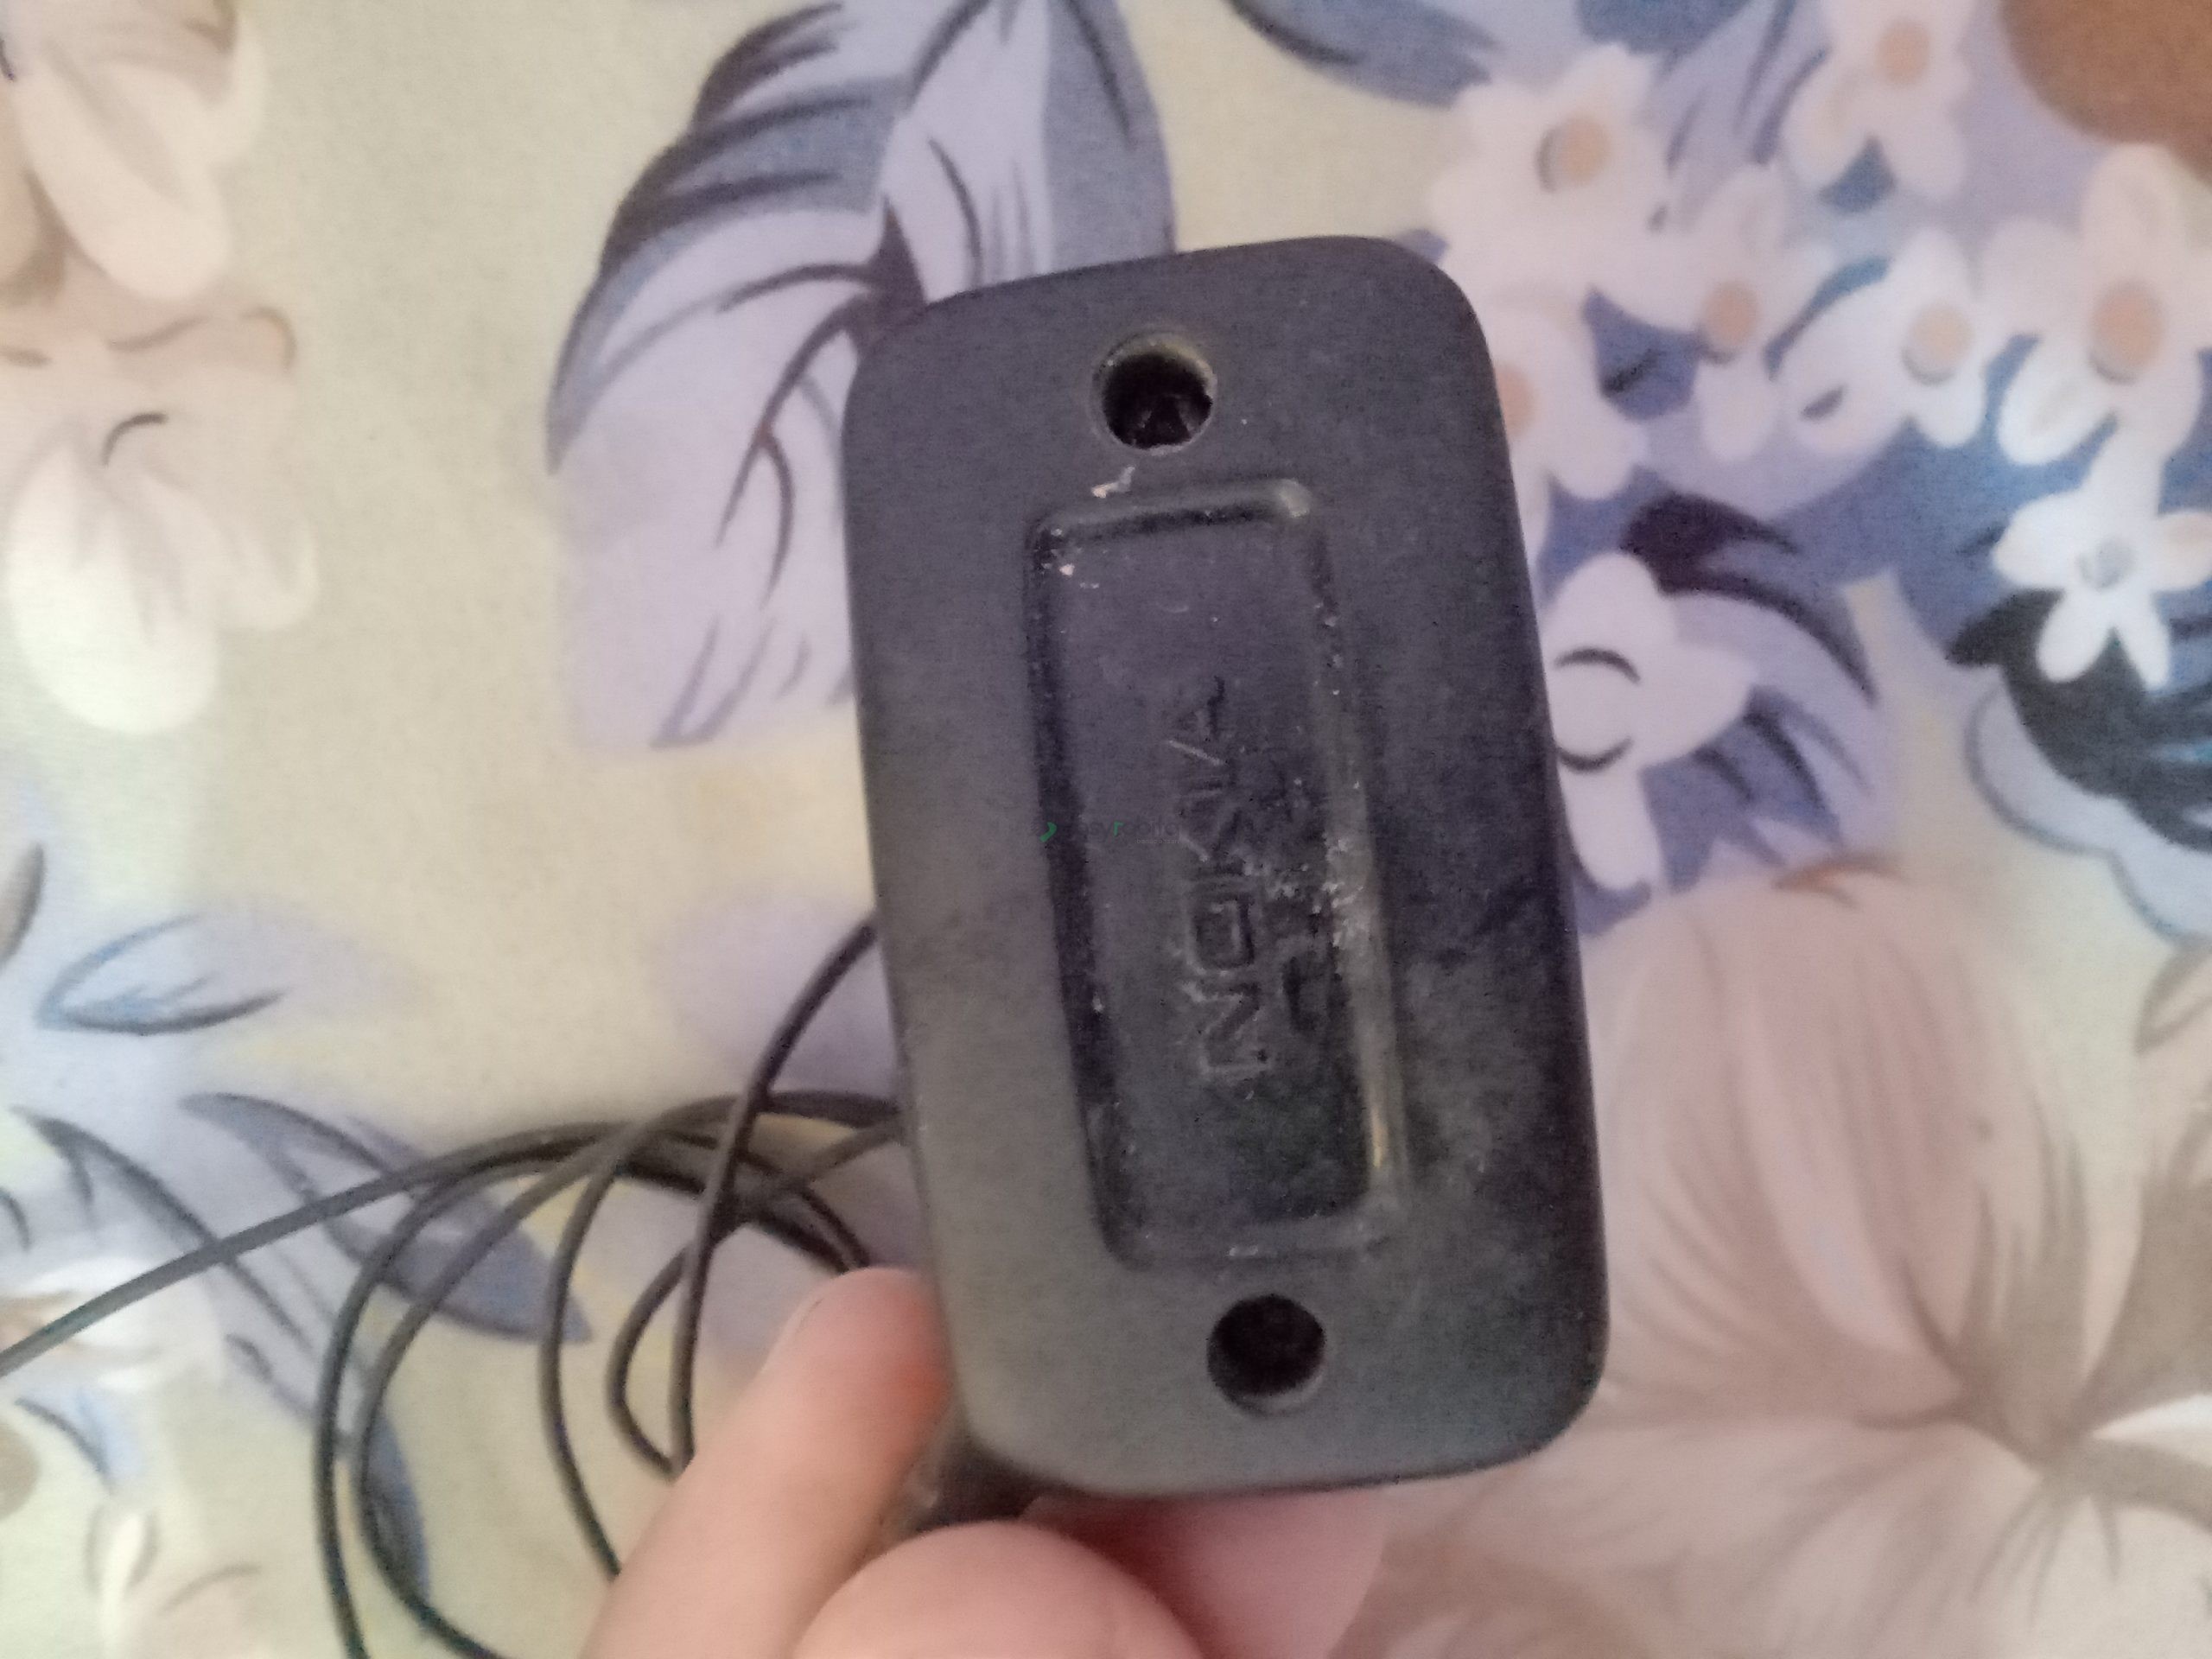 Original Nokia Thin Pin Charger